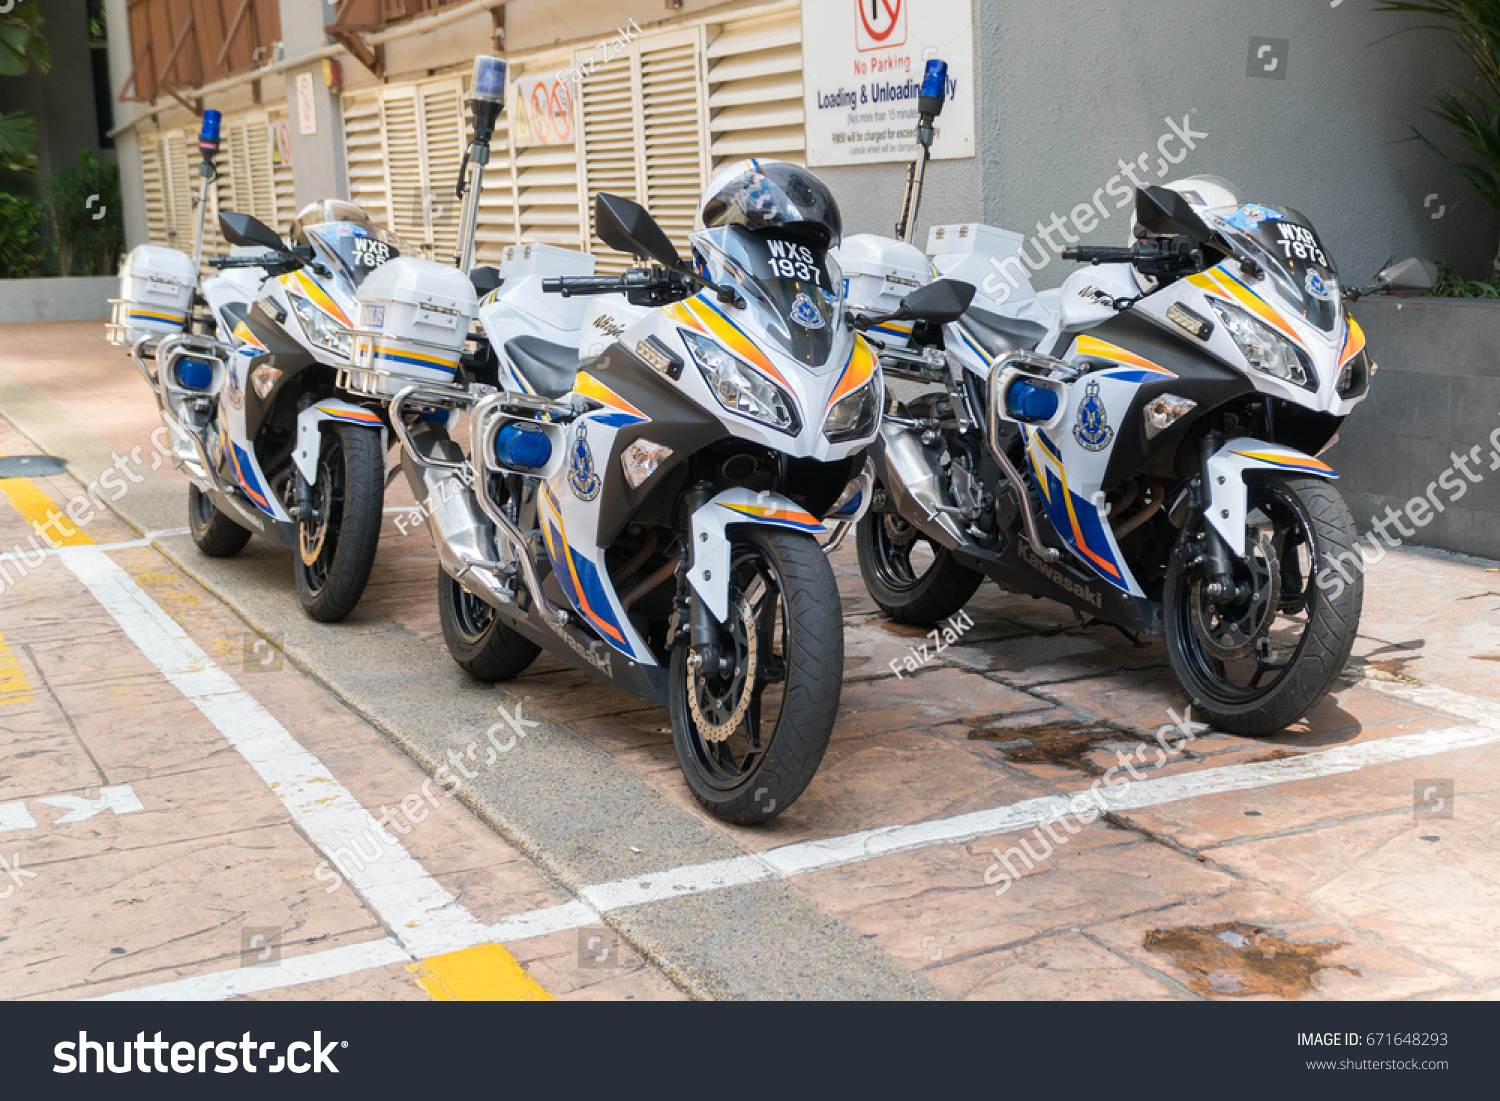 Moto polis diraja malaysia